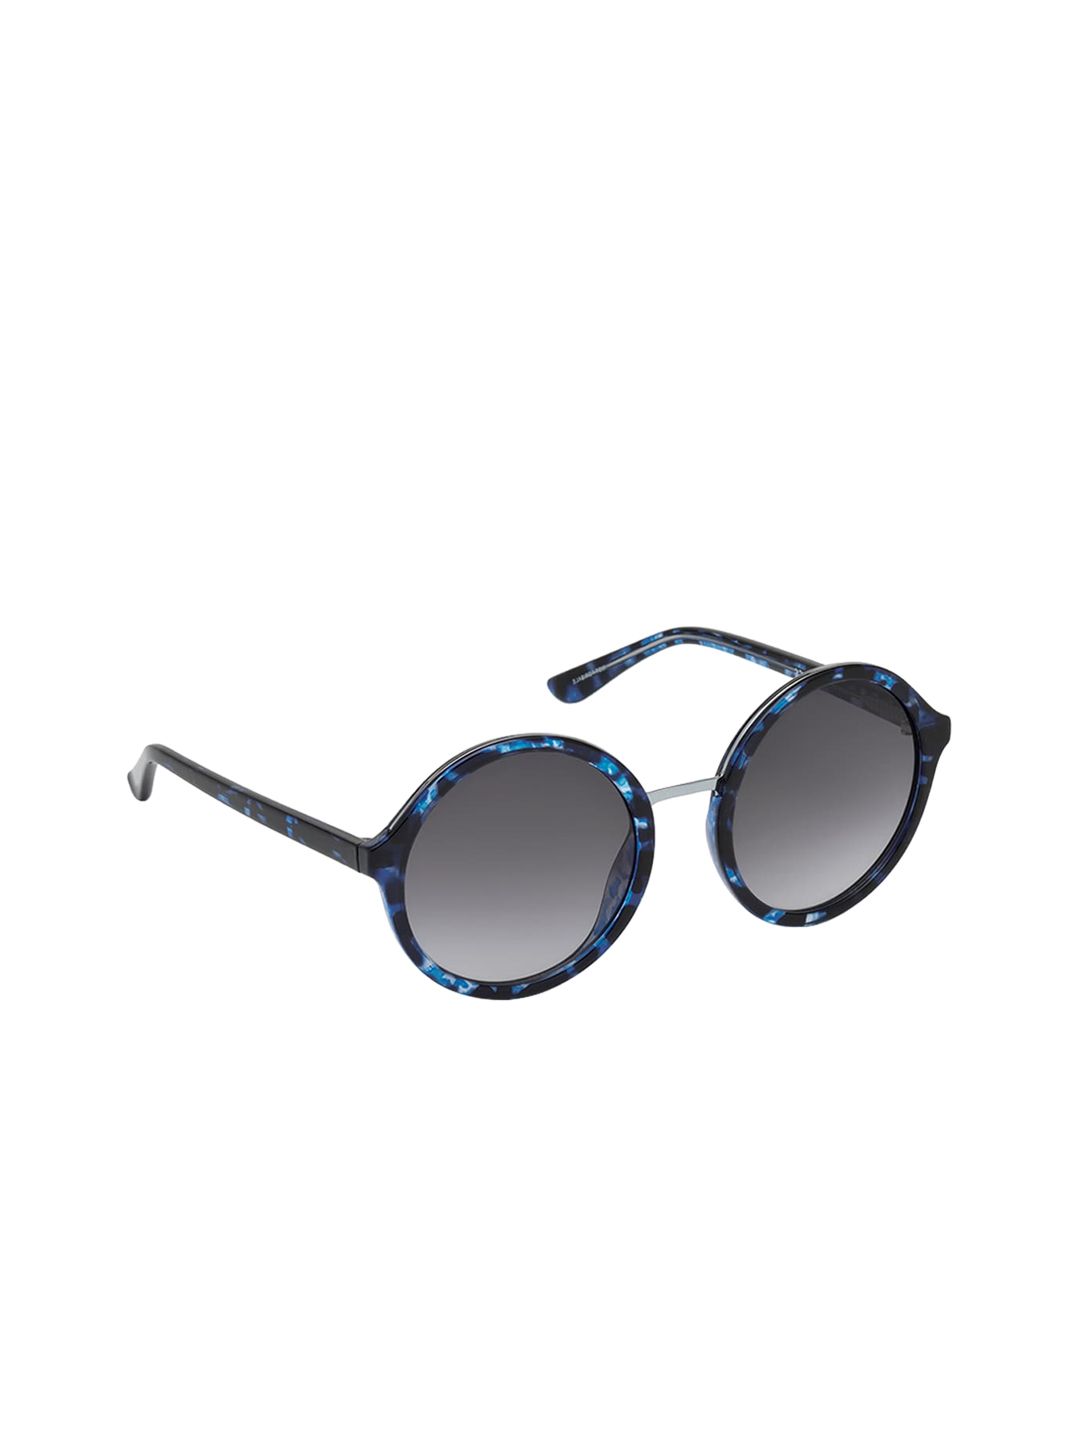 GUESS Women Round Sunglasses GU7558 54 92B Price in India